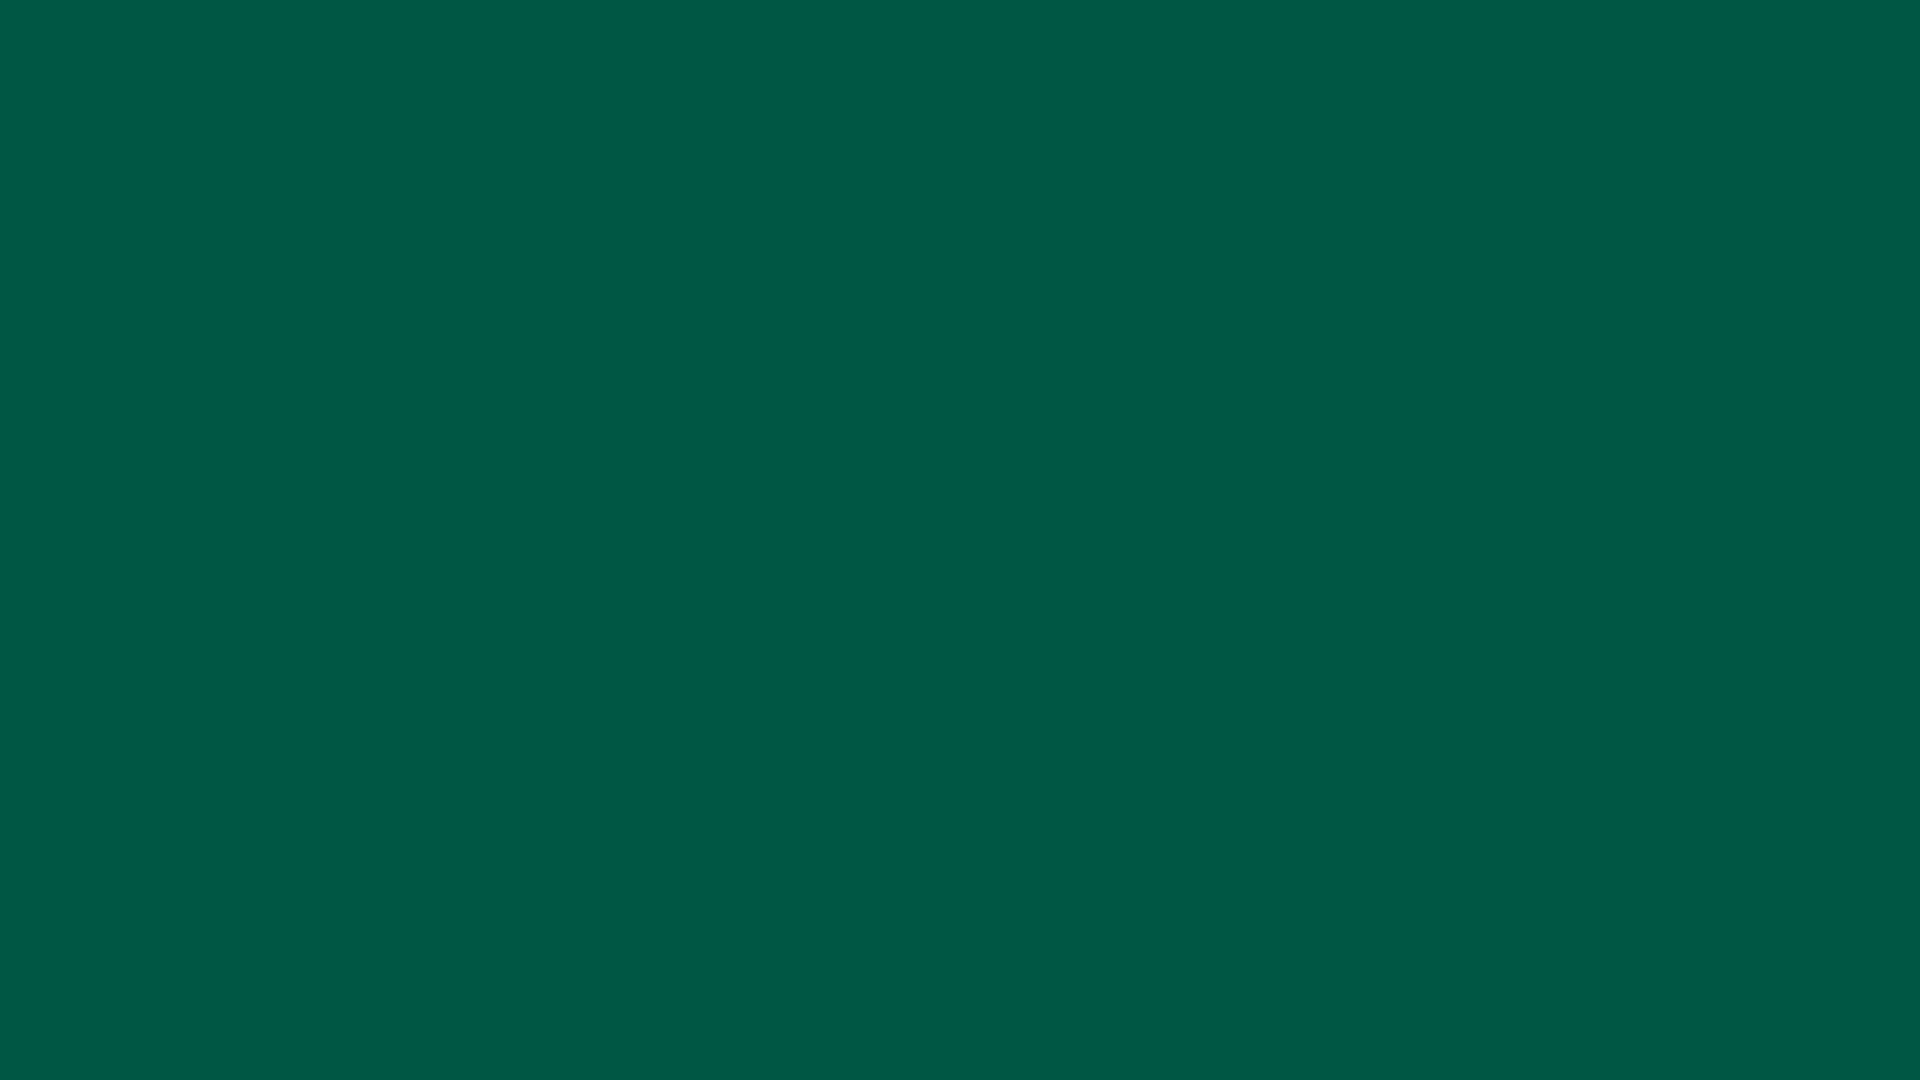 1920x1080 Castleton Green Solid Color Background